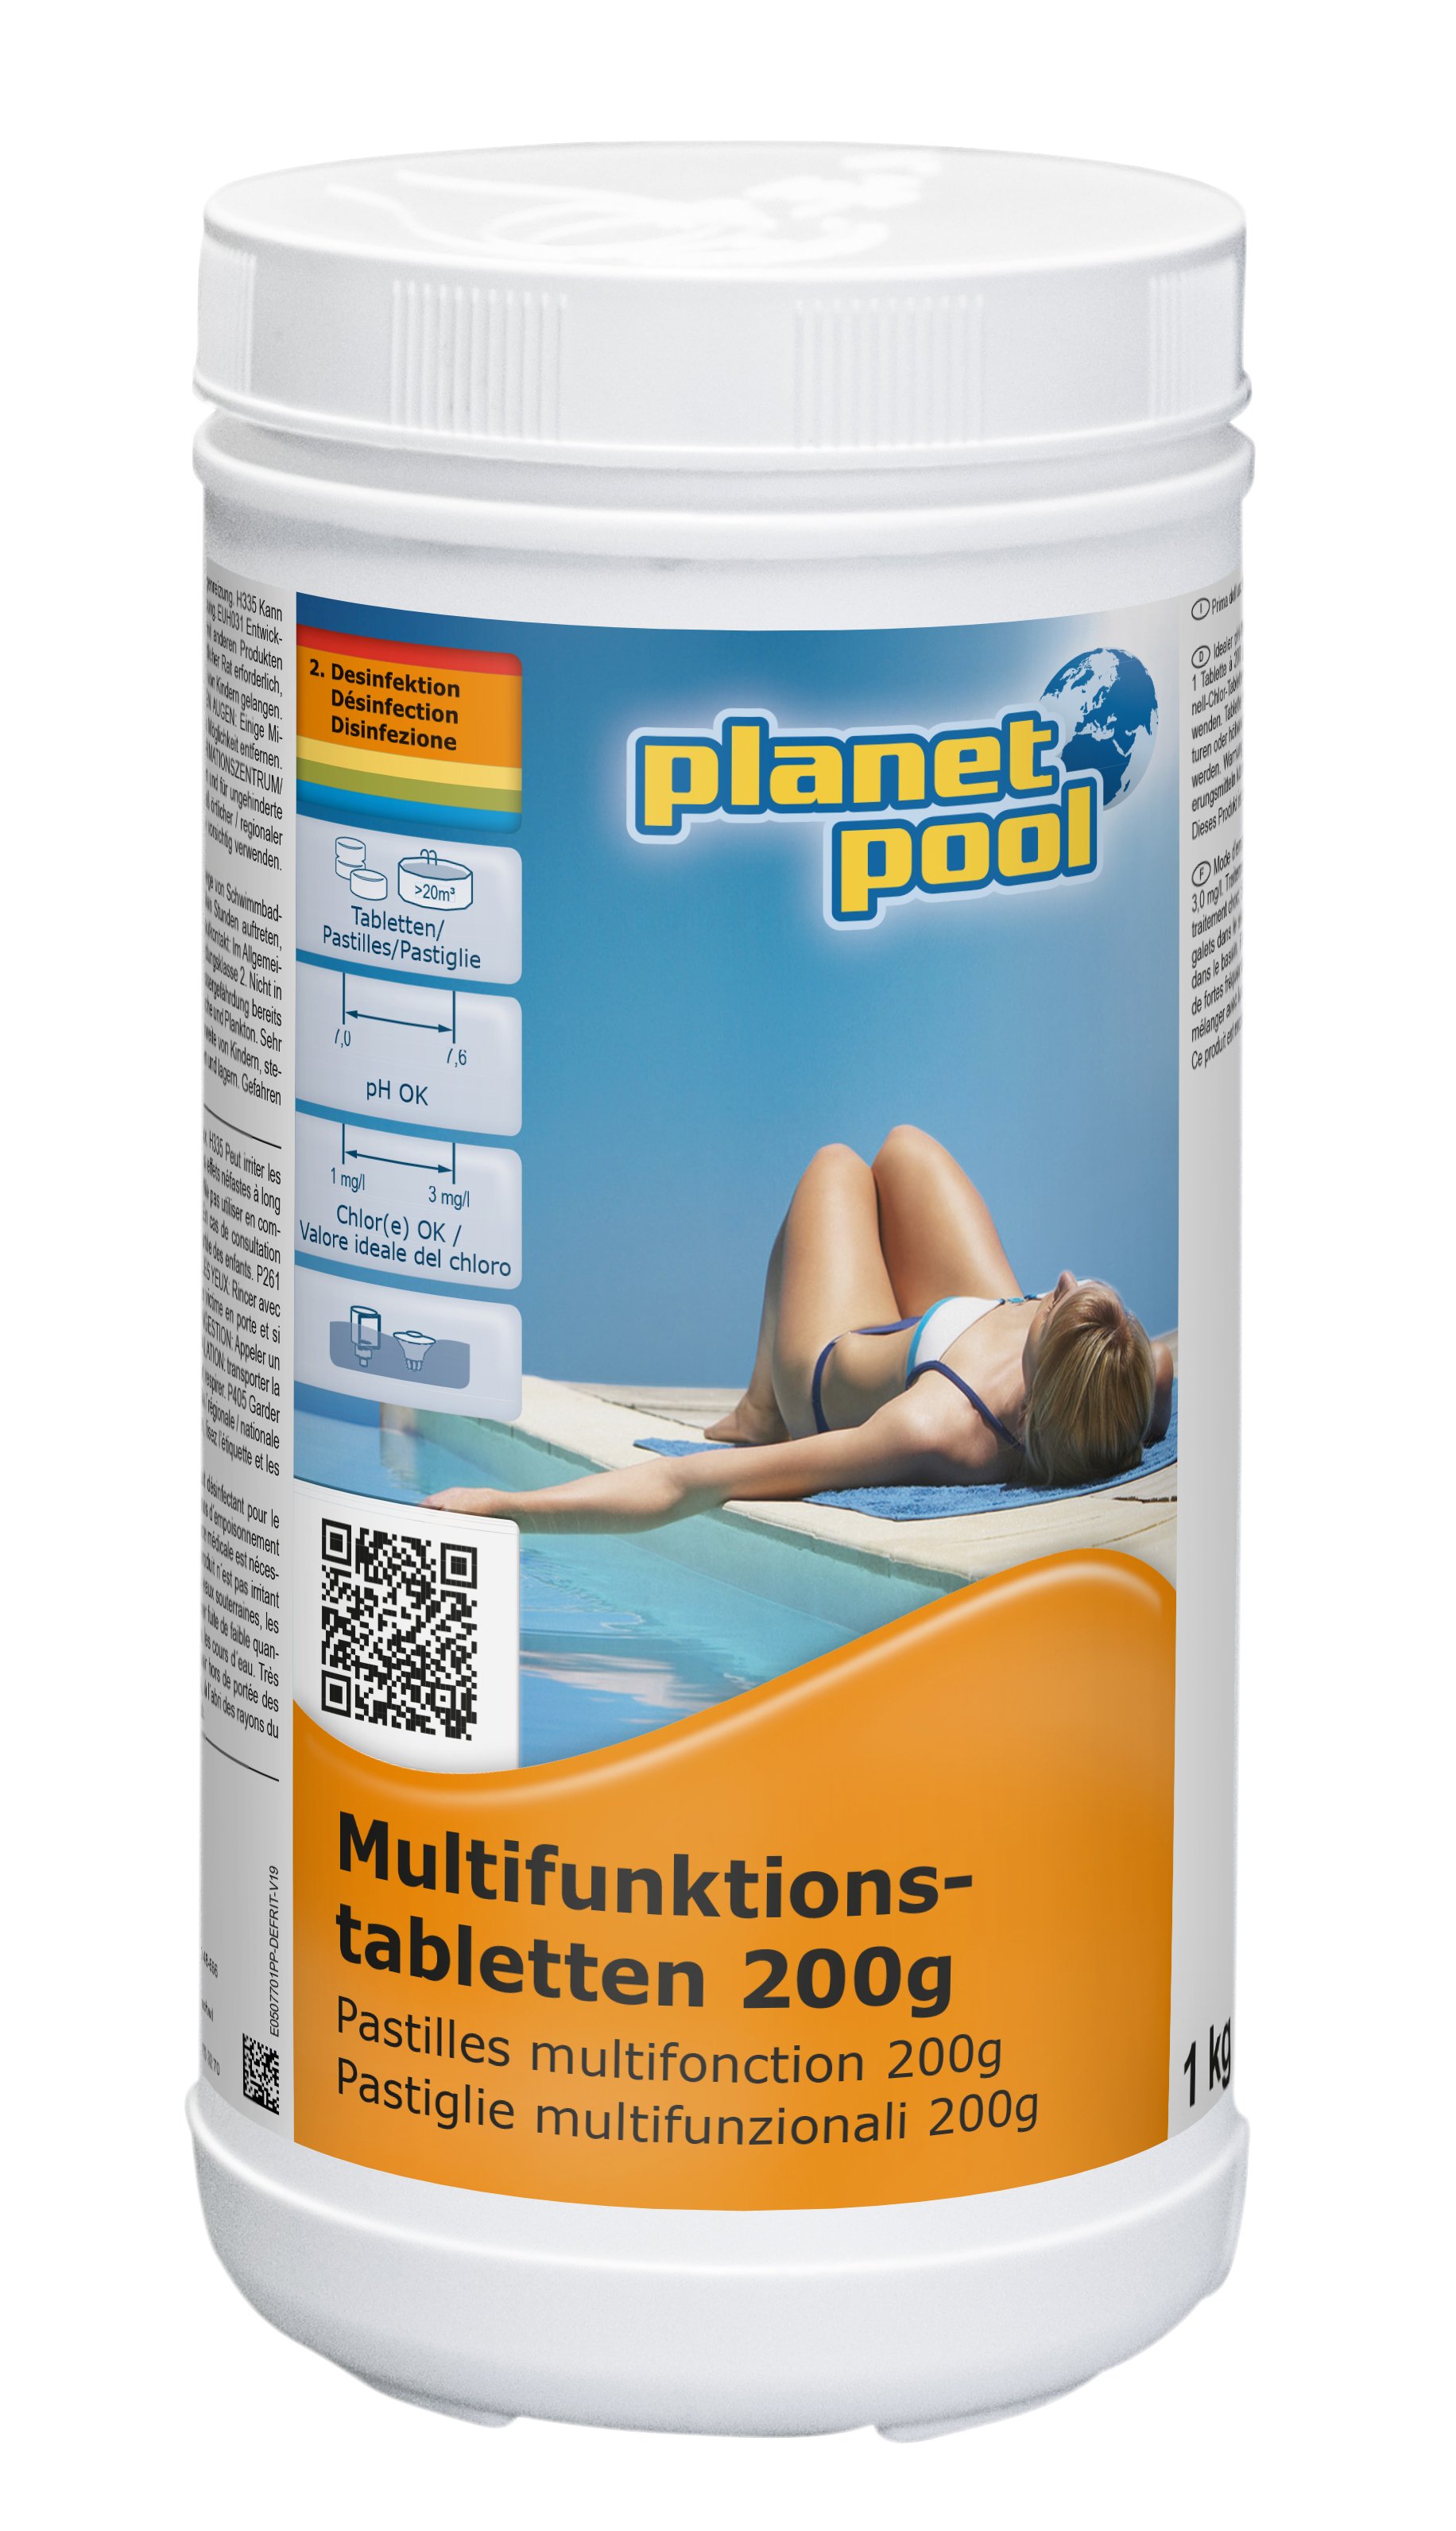 PLANET POOL Multifunktions-Tabletten 200g 1 kg